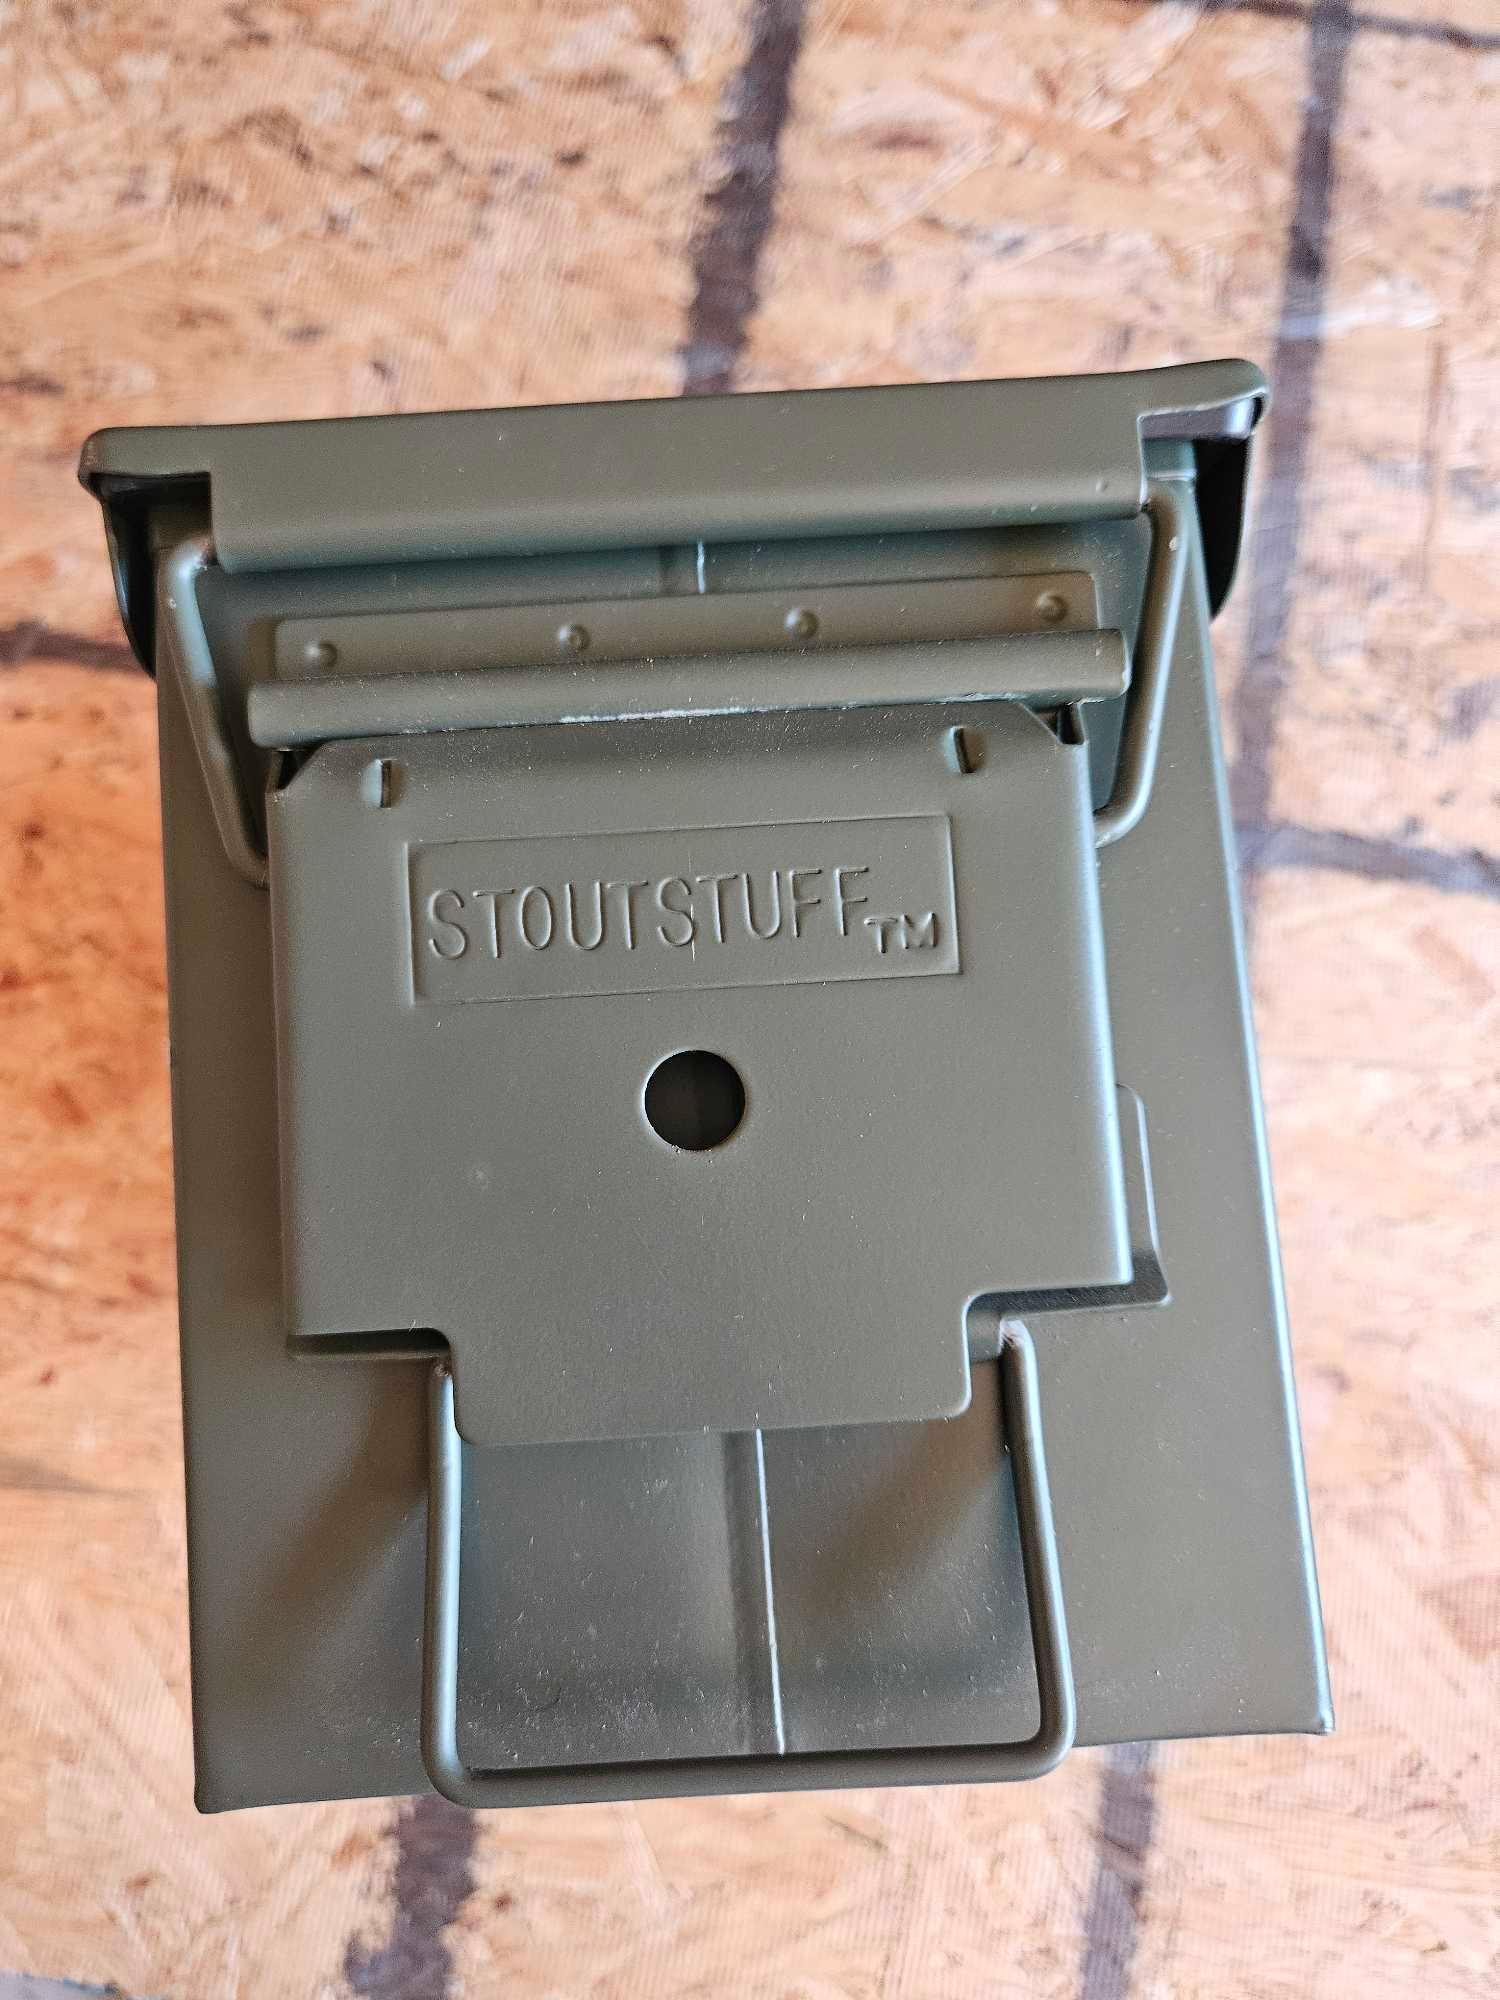 Ammo box with a few pieces of odd gear